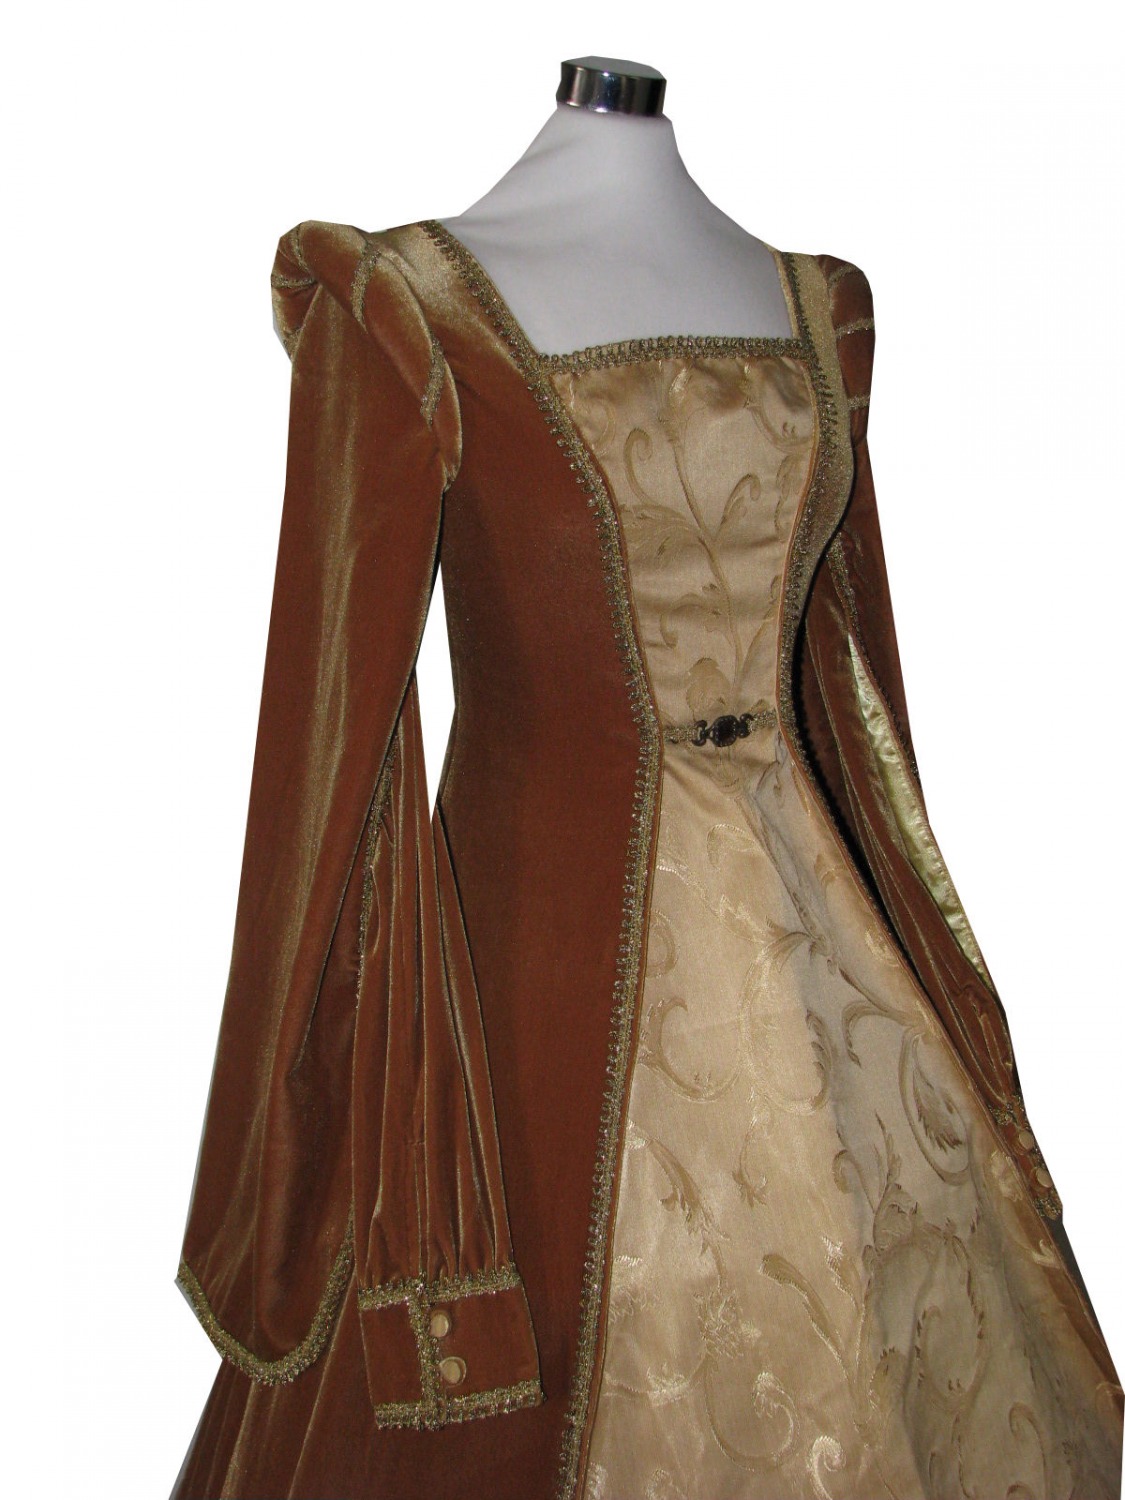 Ladies Medieval Tudor Ann Boleyn Costume And French Hood Headdress Size 8 - 10 Image